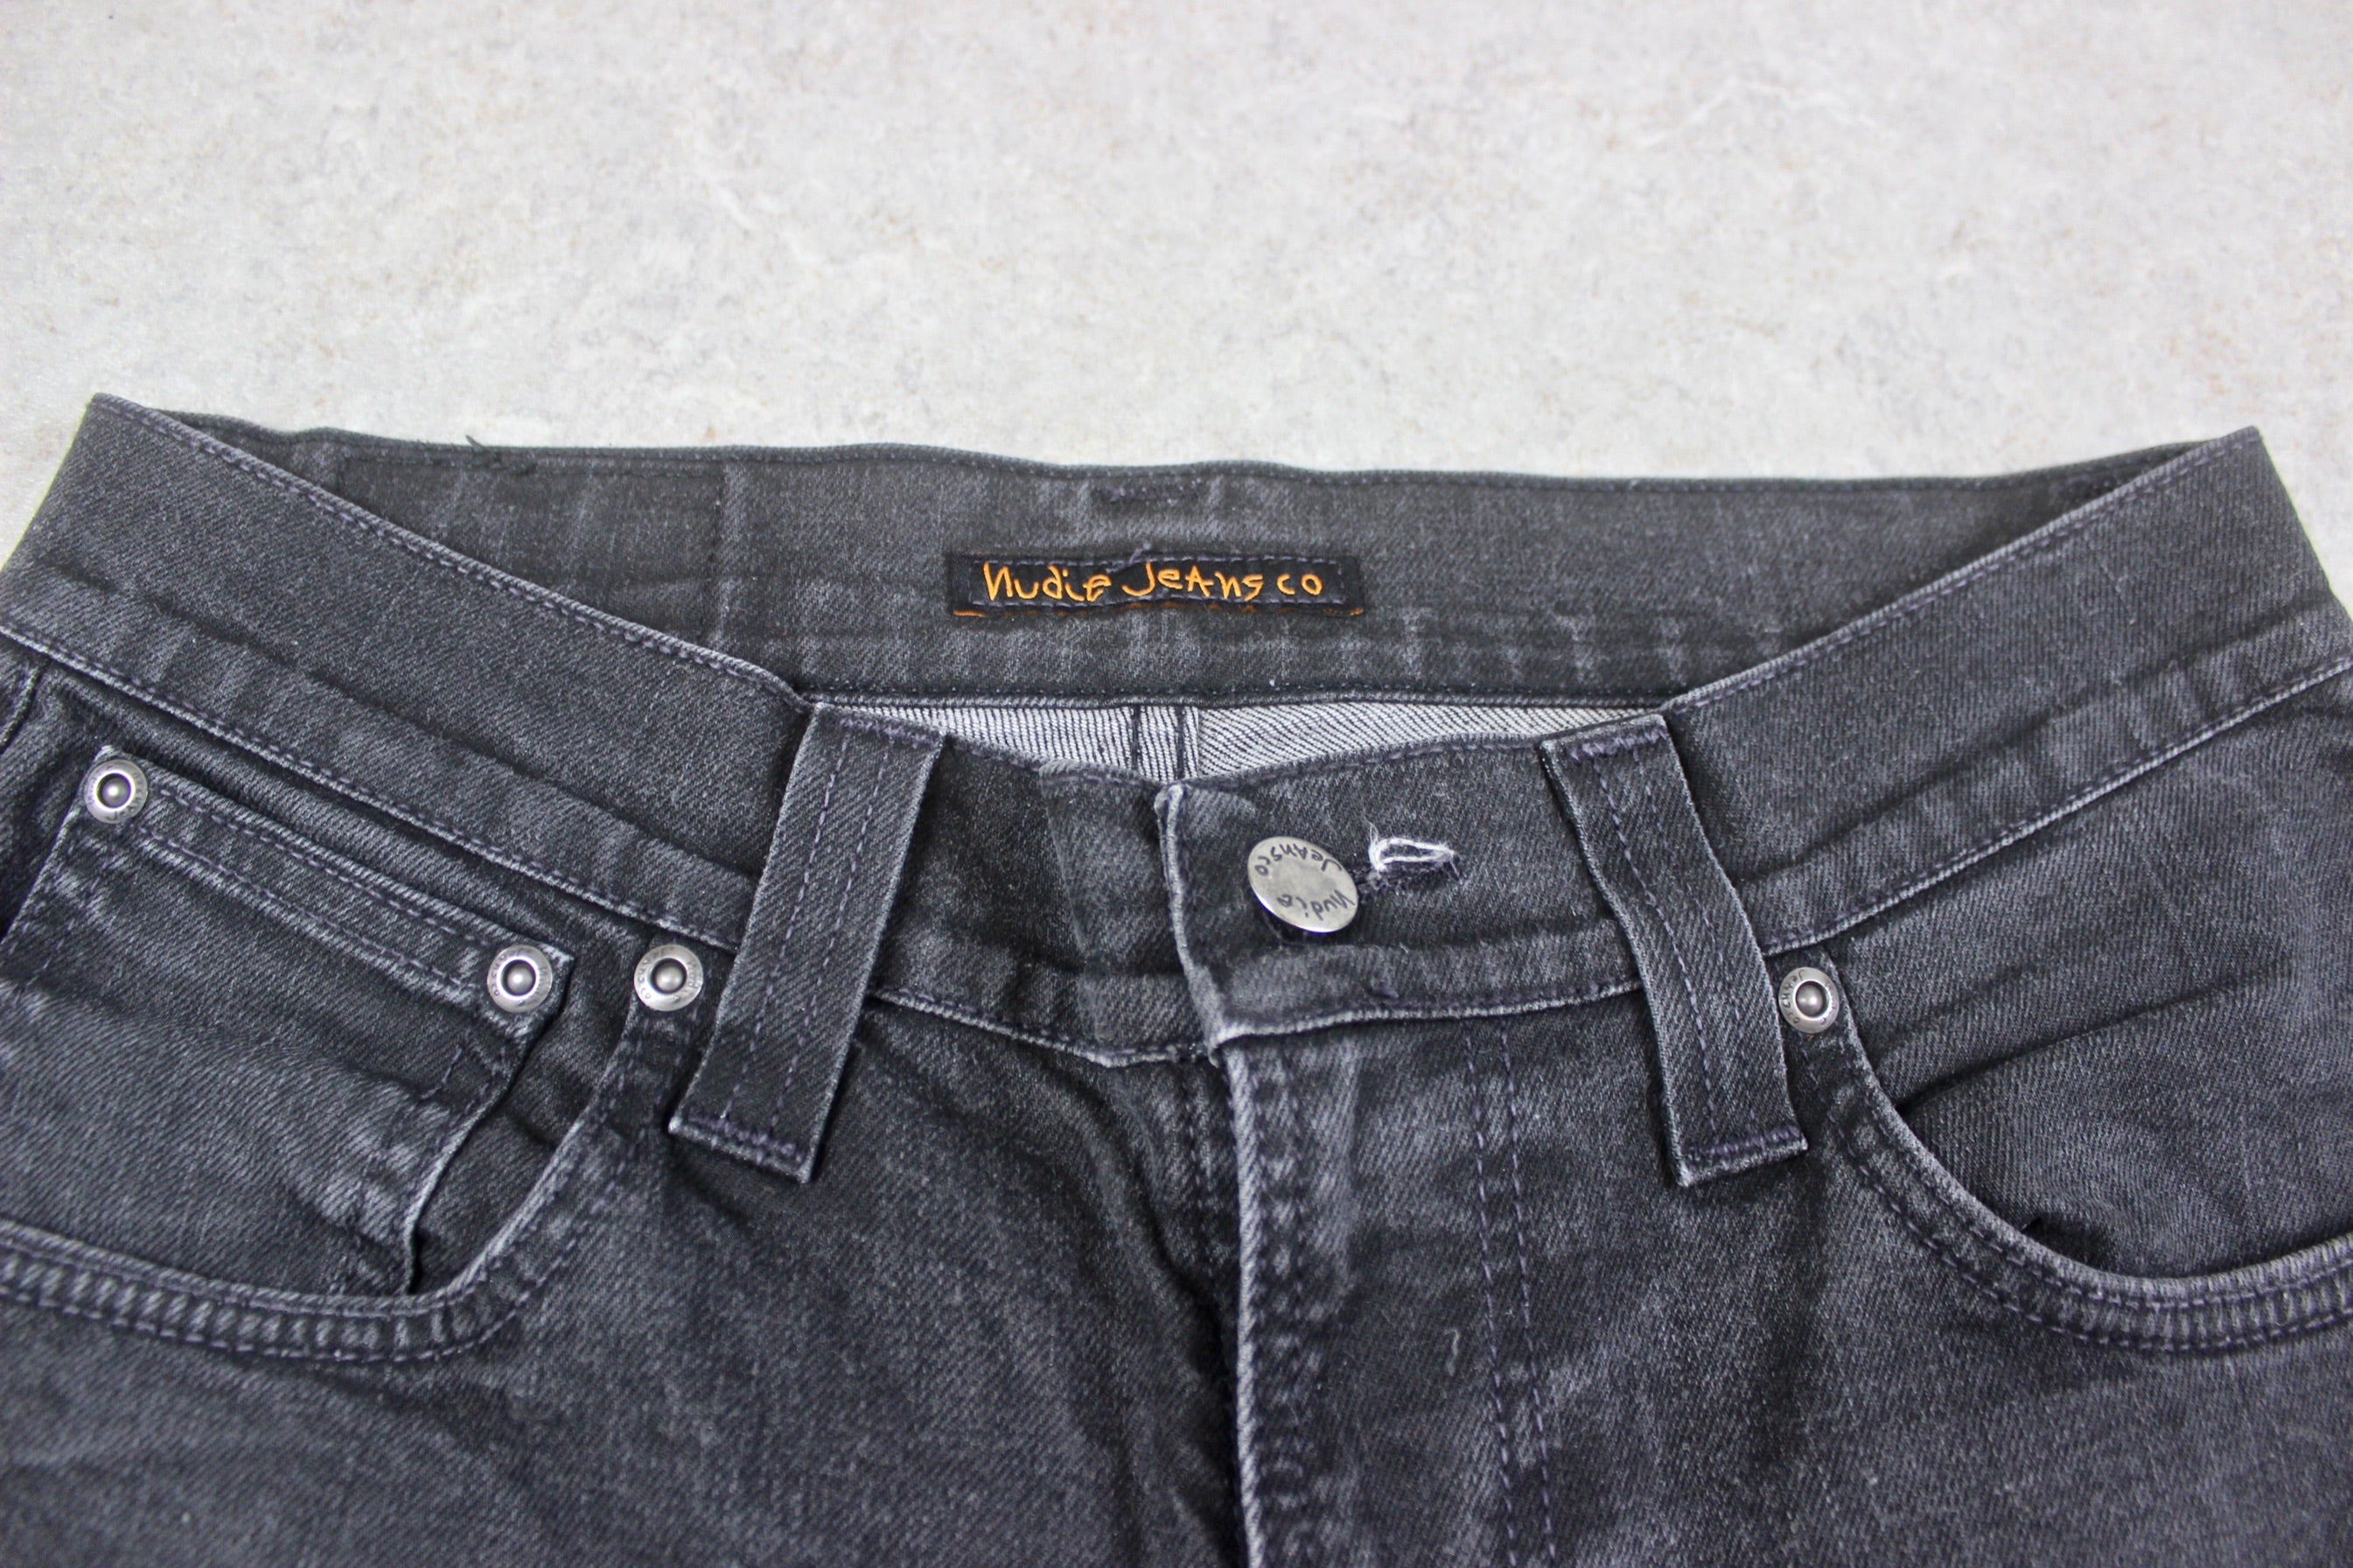 Nudie Jeans Co - Denim Cut Off Shorts - Black - 30